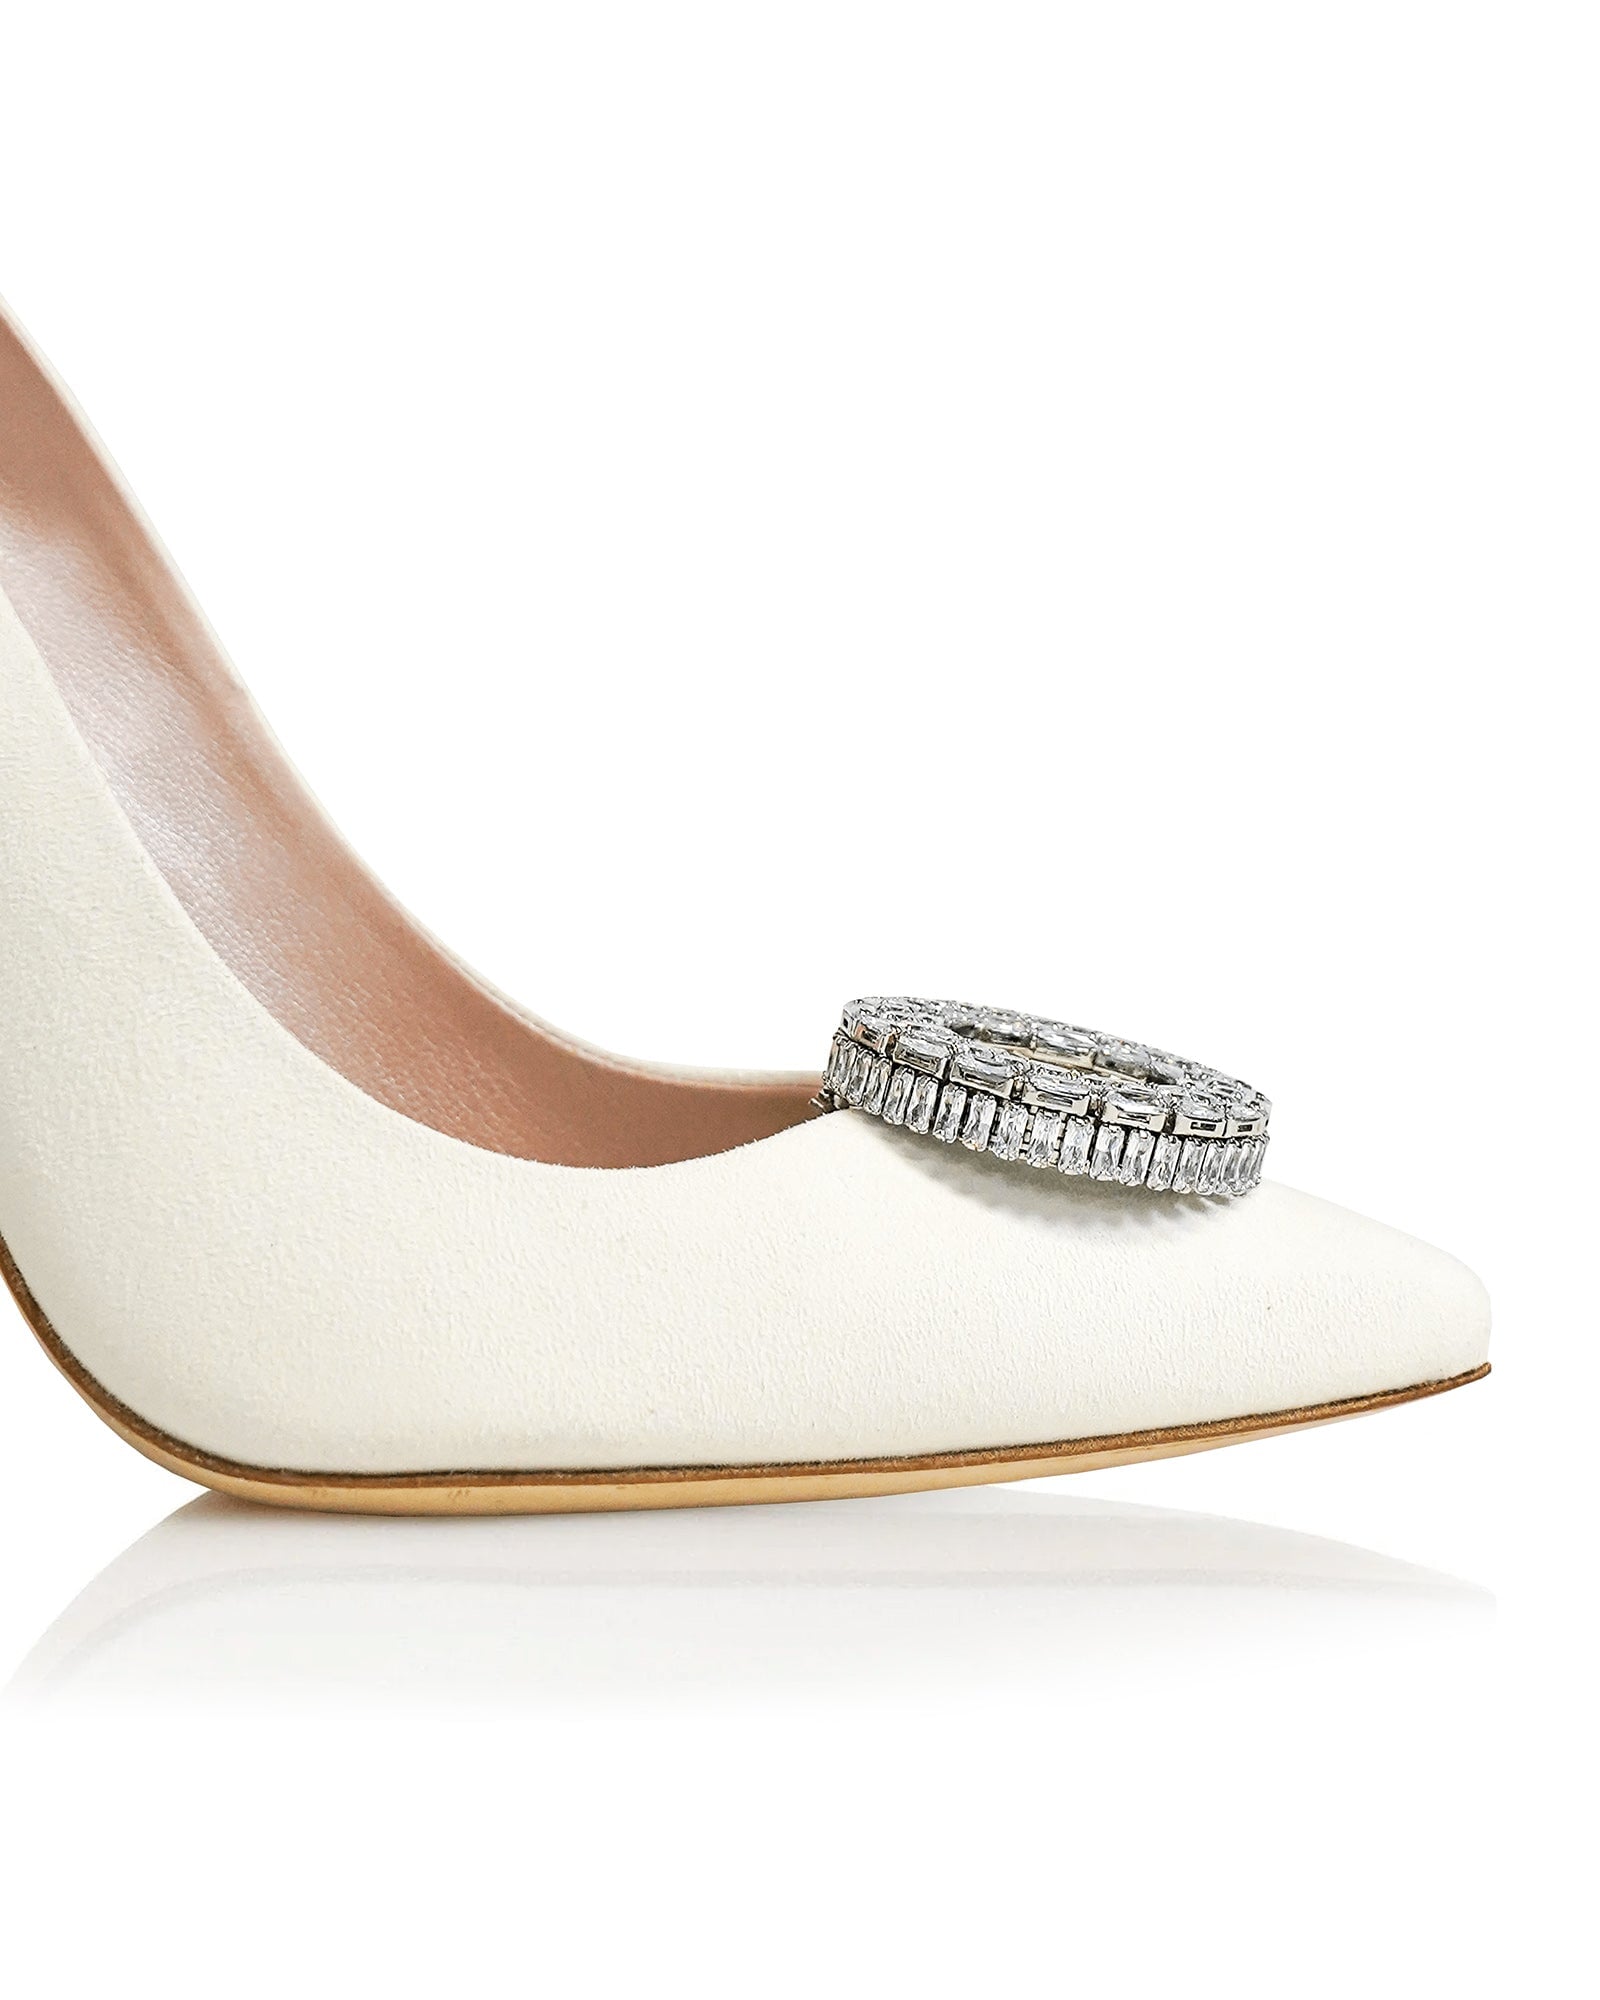 Orbit Silver & Crystal Shoe Clips Shoe Clip Crystal Shoe Clip  image